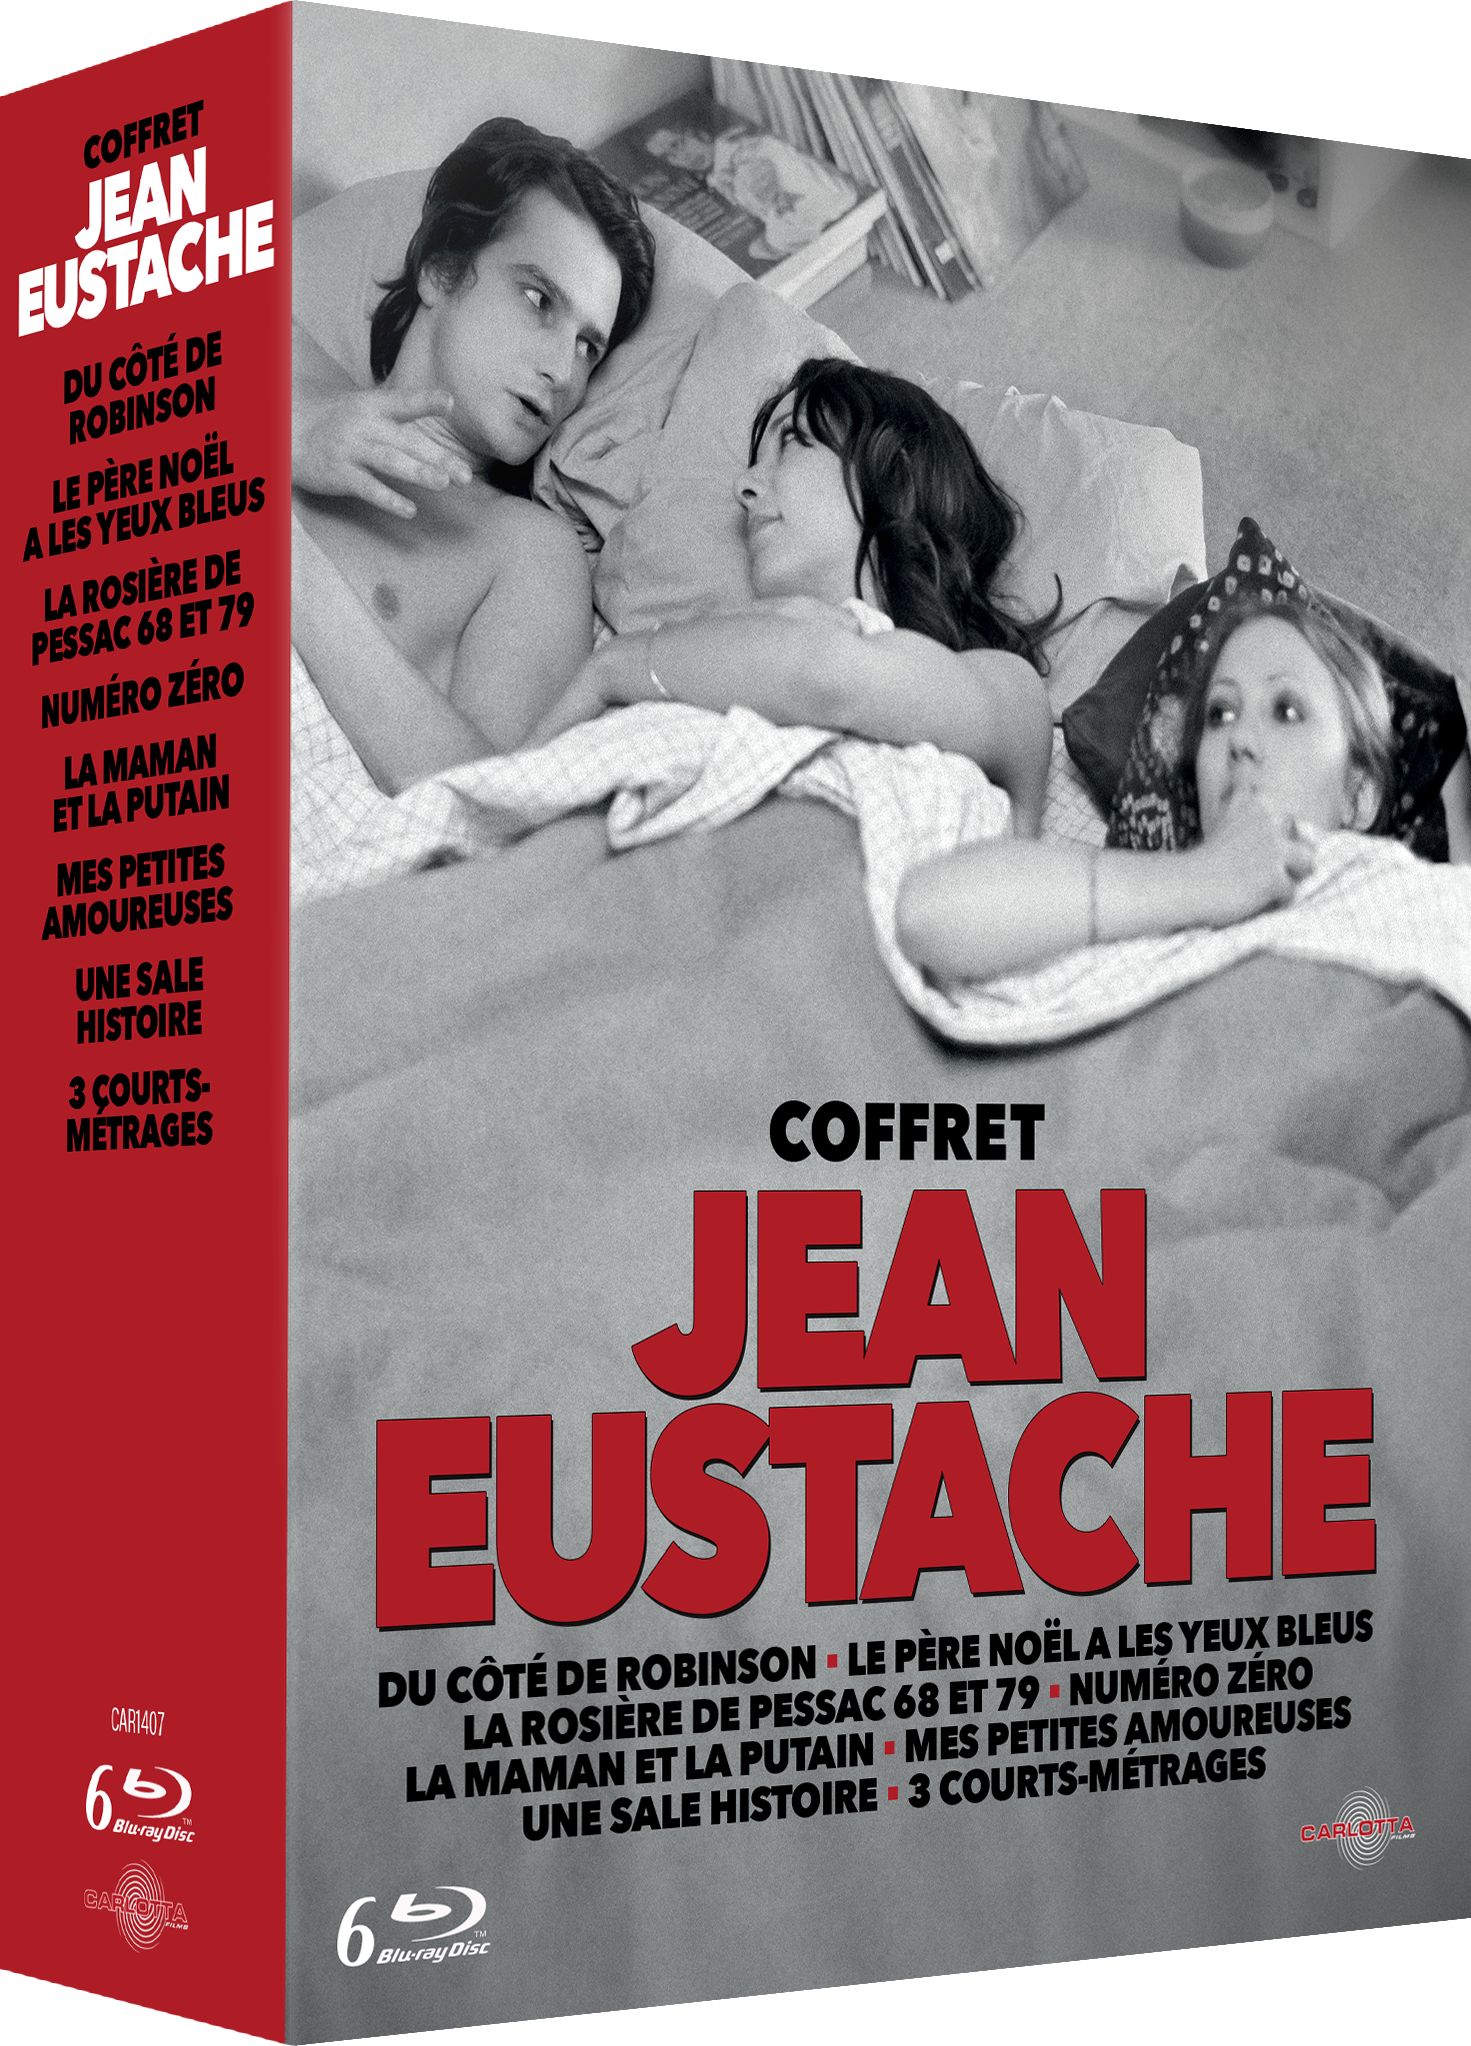 Jean Eustache box set